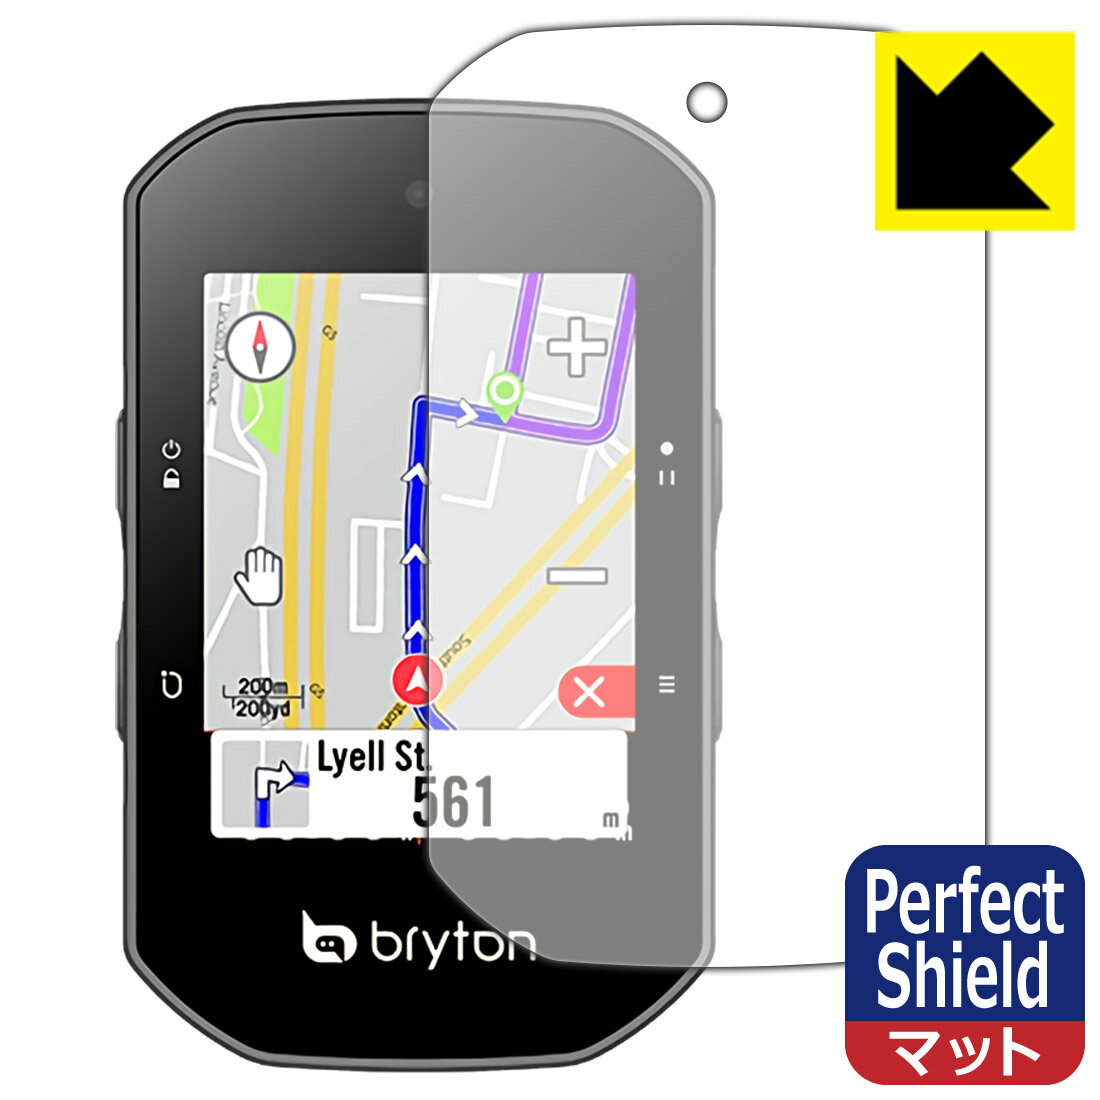 Perfect Shield bryton Rider S500  ¤ľ